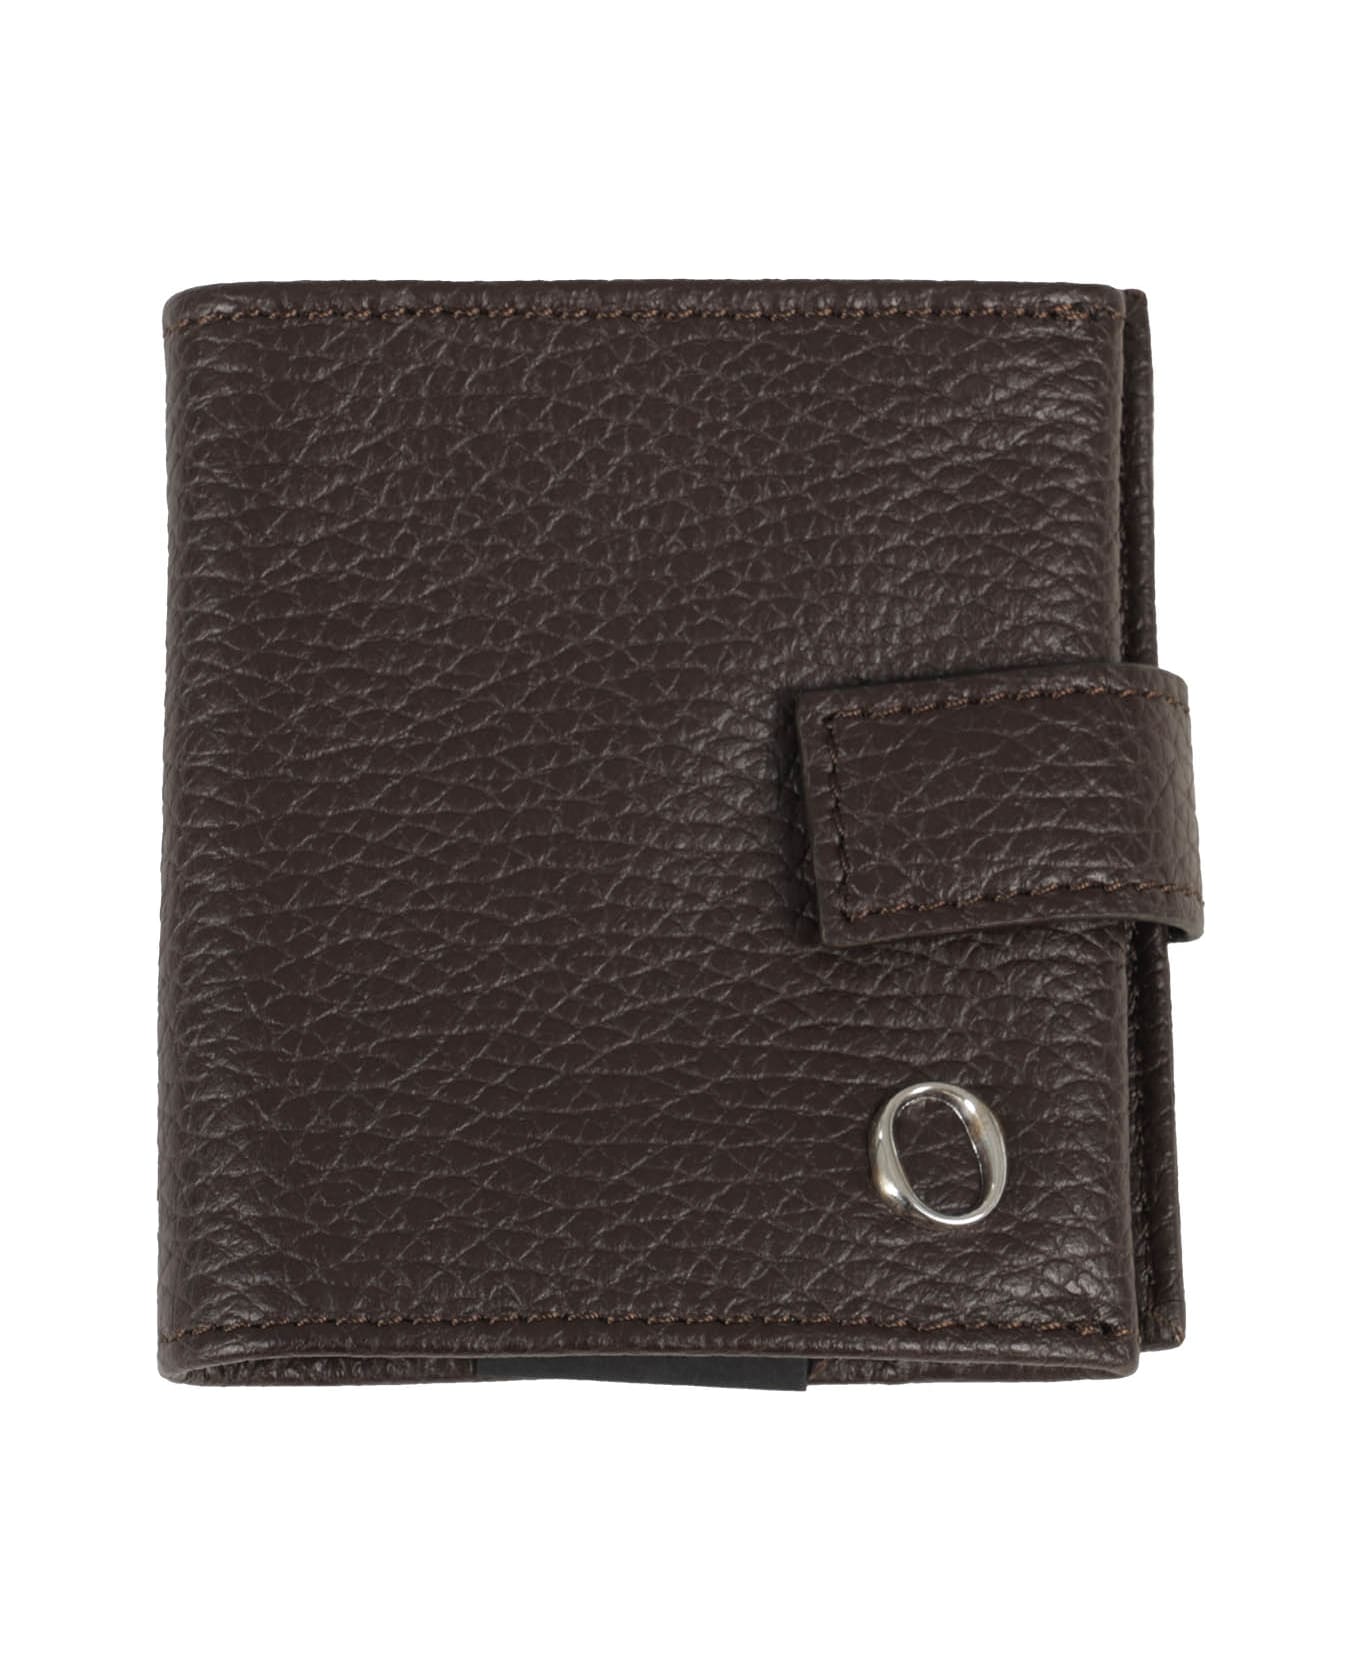 Orciani Leather Wallet - Eba Ebano 財布